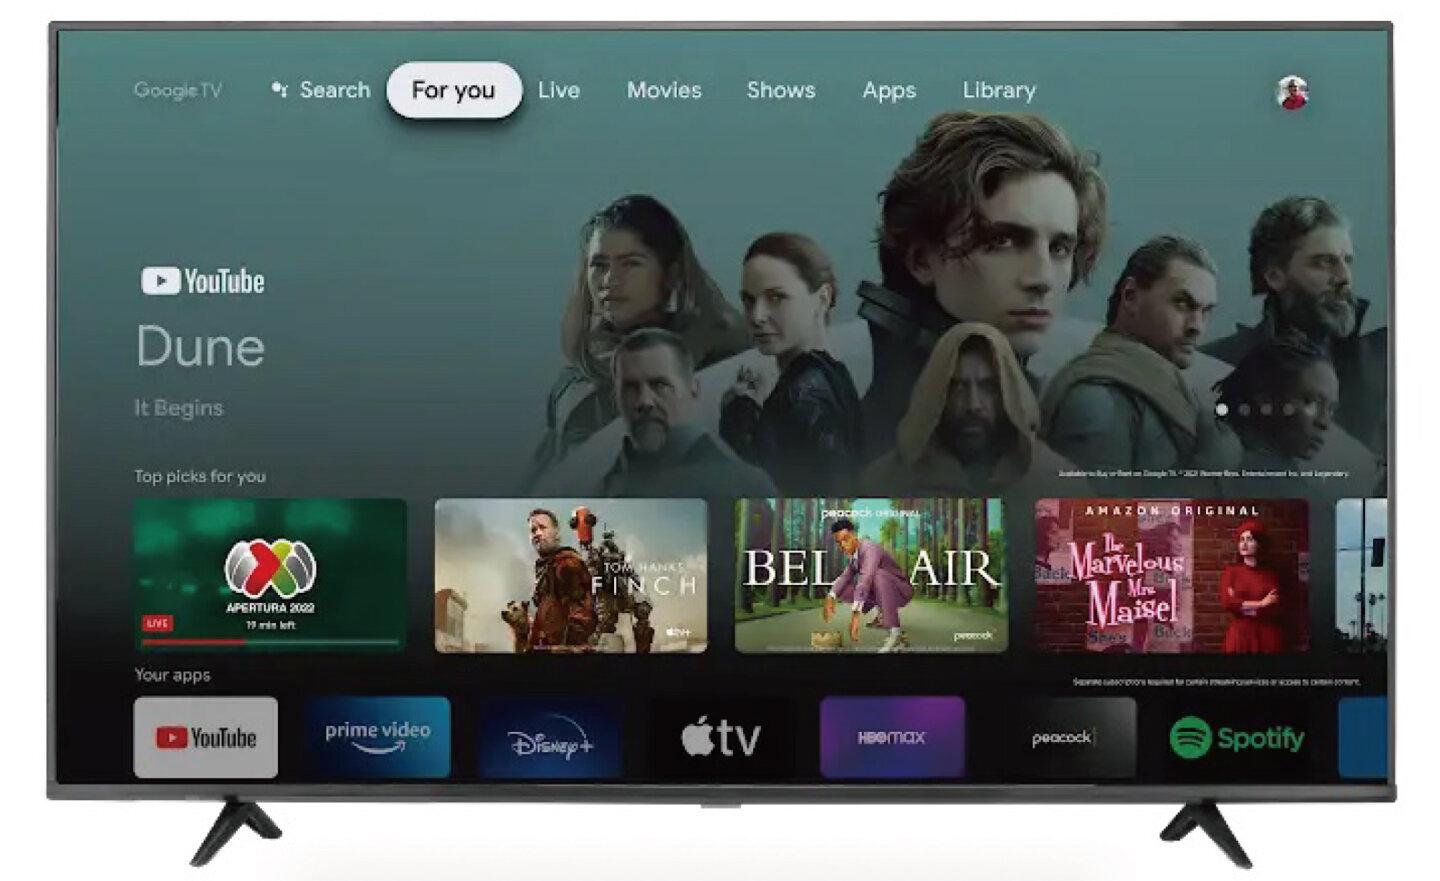 Google TV 增加 800 多個免費頻道，搶攻市場版圖、提升吸引力